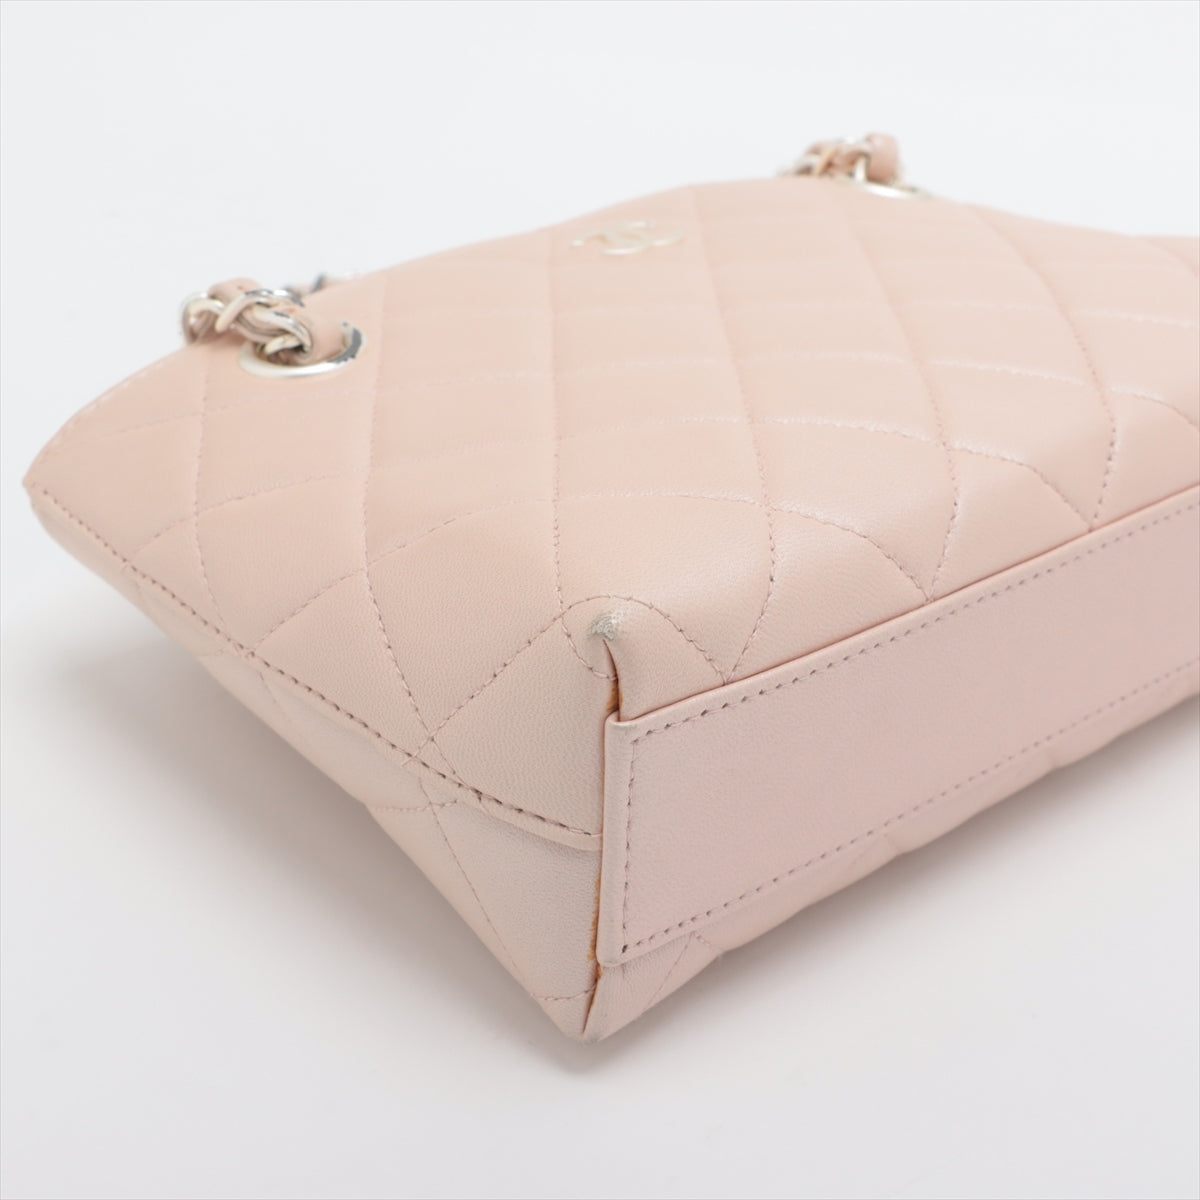 Chanel Matrasse Leather Chain Handbag Pink Silver G  6th